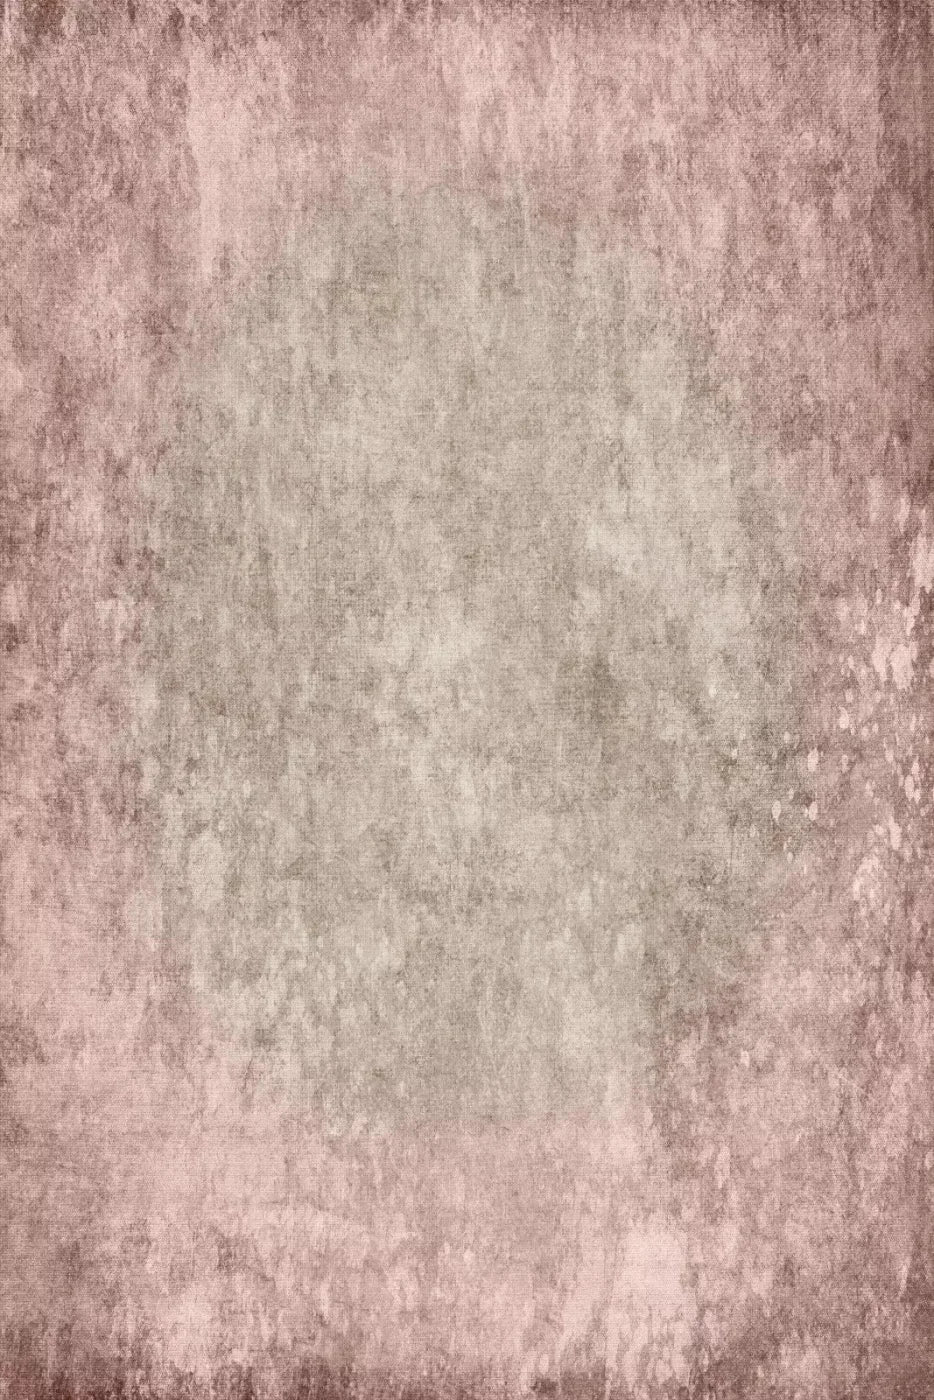 Blushing 4X5 Rubbermat Floor ( 48 X 60 Inch ) Backdrop